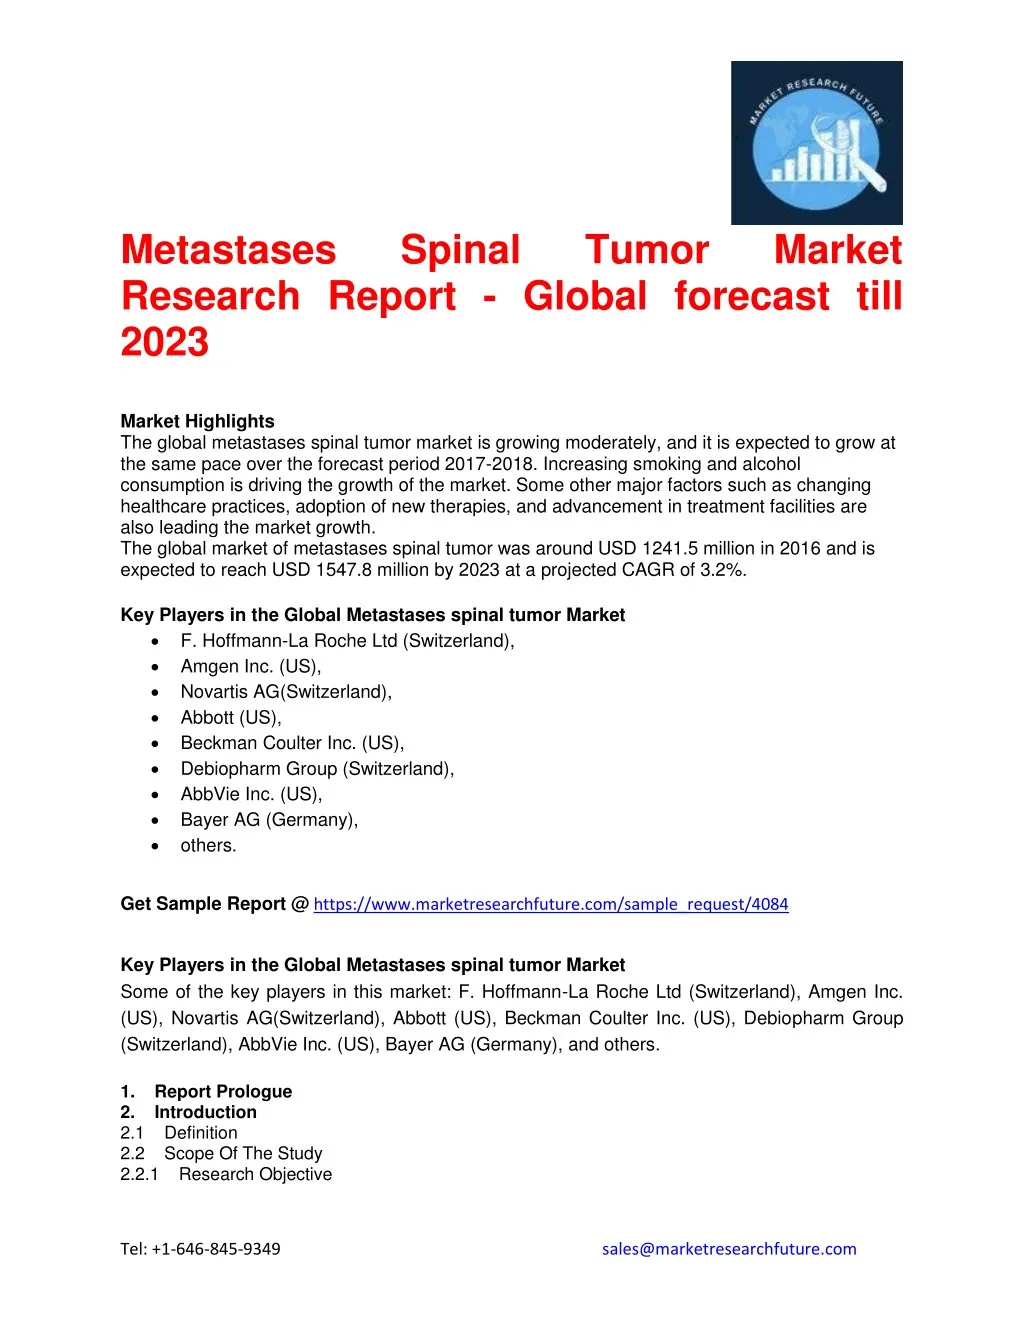 metastases research report global forecast till